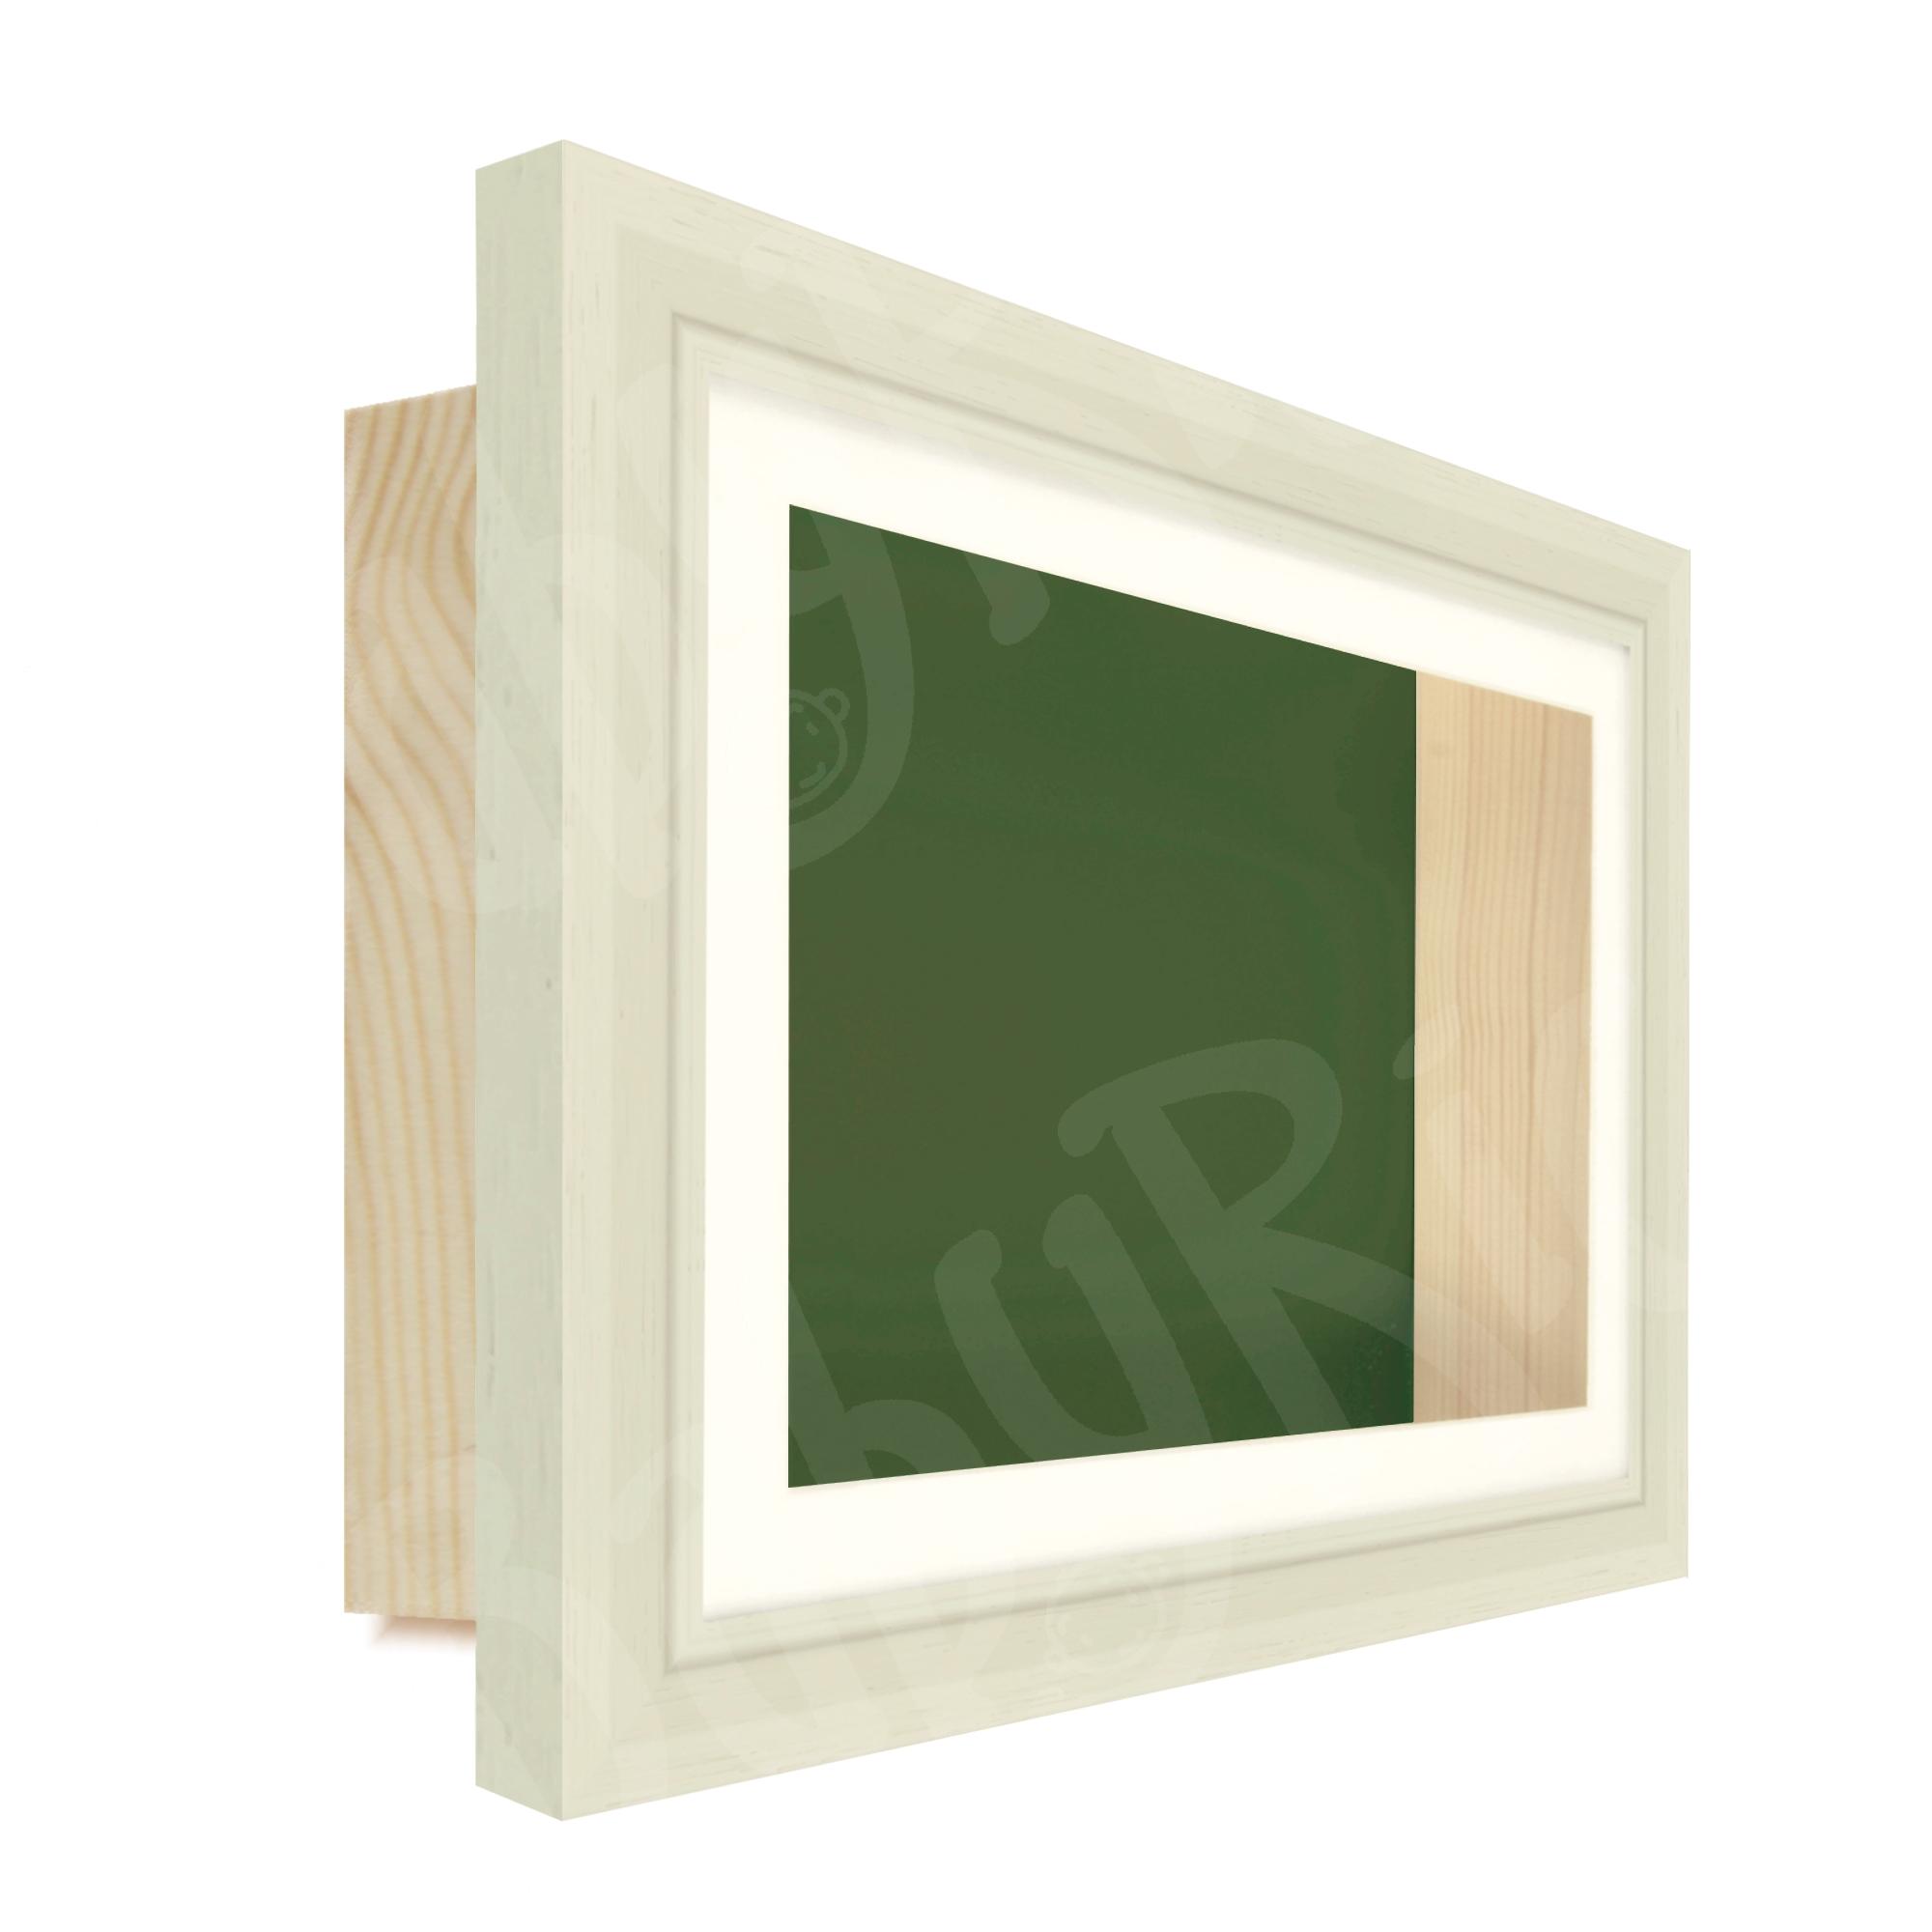 Cream Deep Shadow Box Frame - Cream Mount and Green Backing